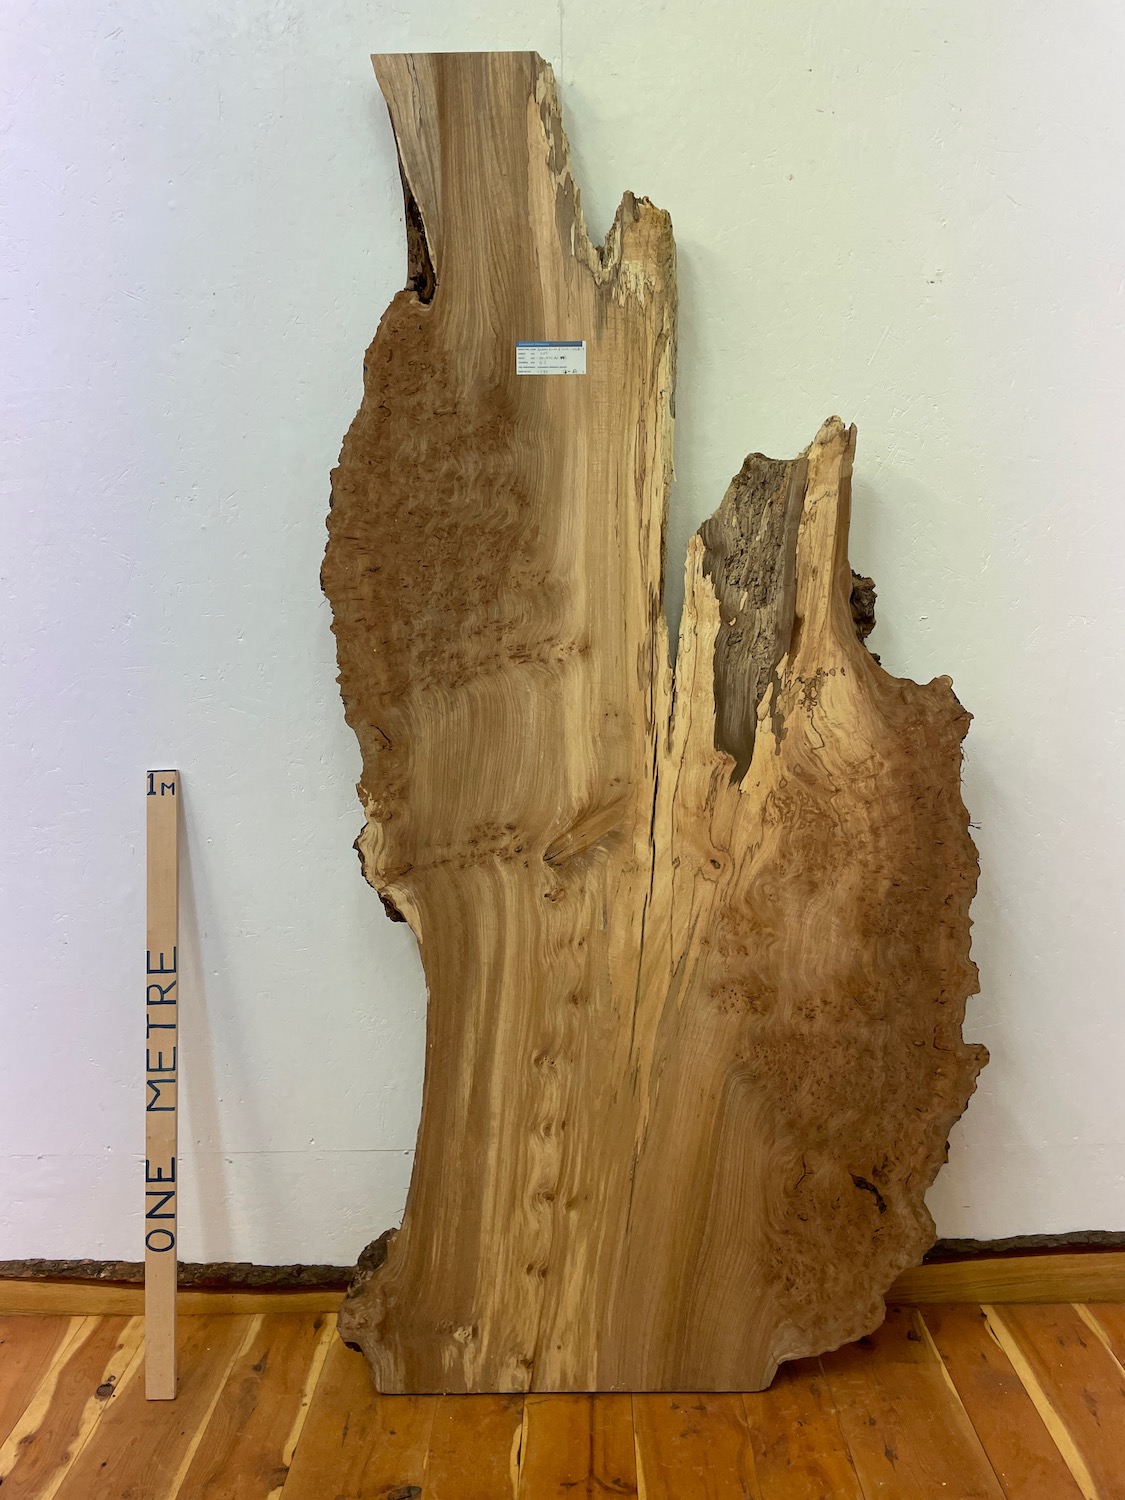 BURRY ELM Natural Waney Edge Slab Wood Timber Board 1392B-3 Thickness 6.5cm Kiln Dried Milled Finish Seasoned Hardwood Wildwood Live Edge Tabletop CoffeeTableTop